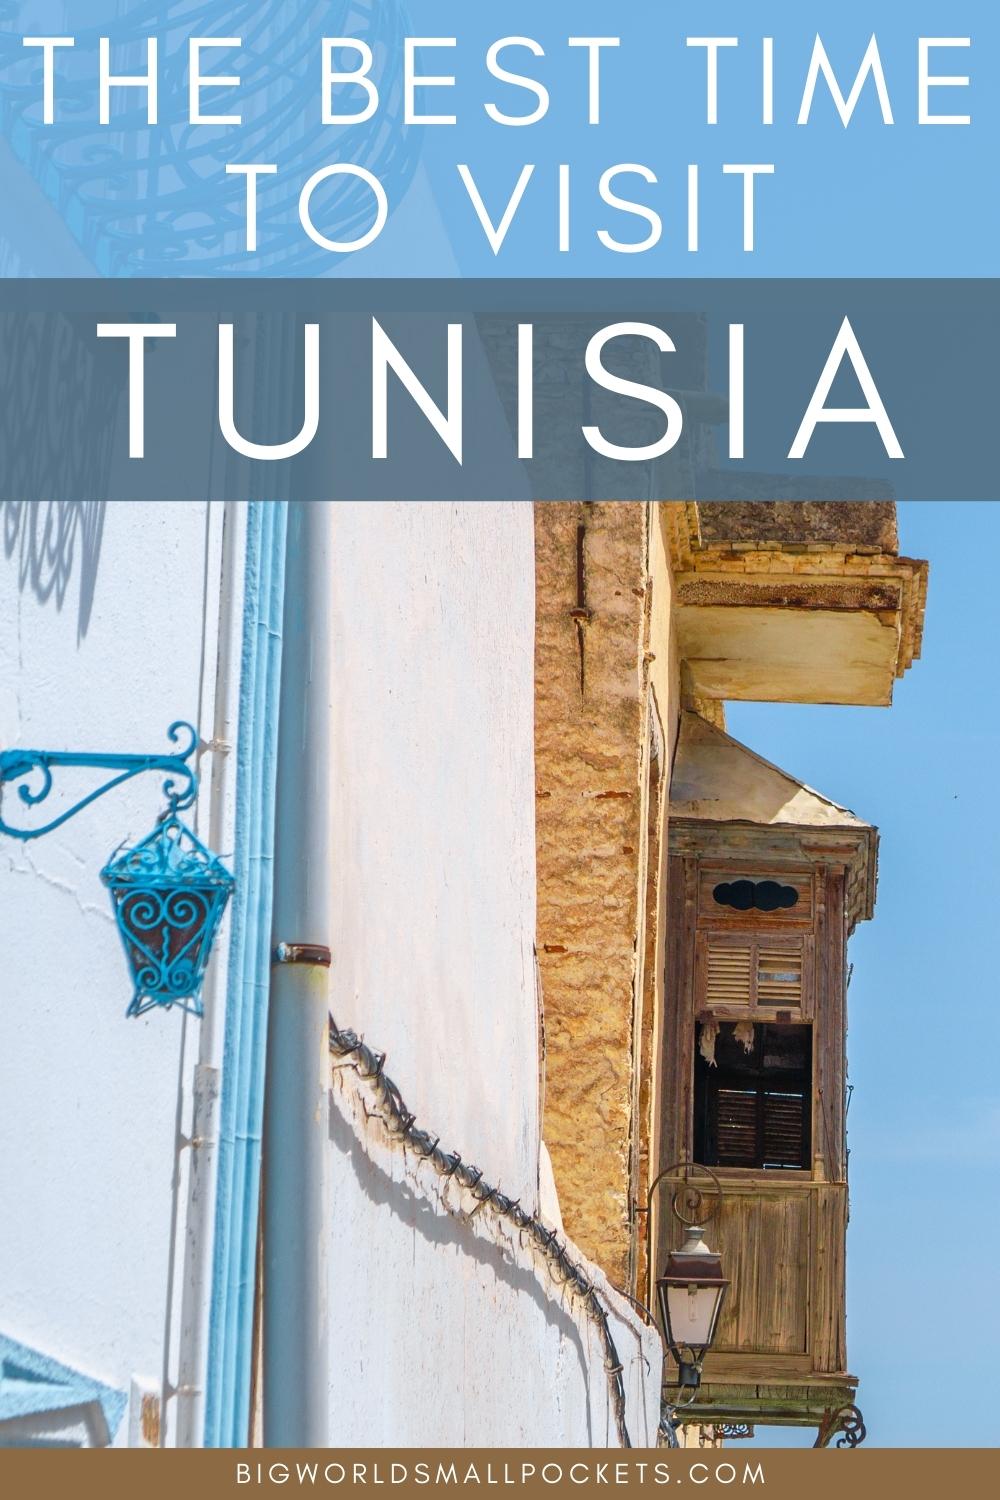 When to Visit Tunisia?